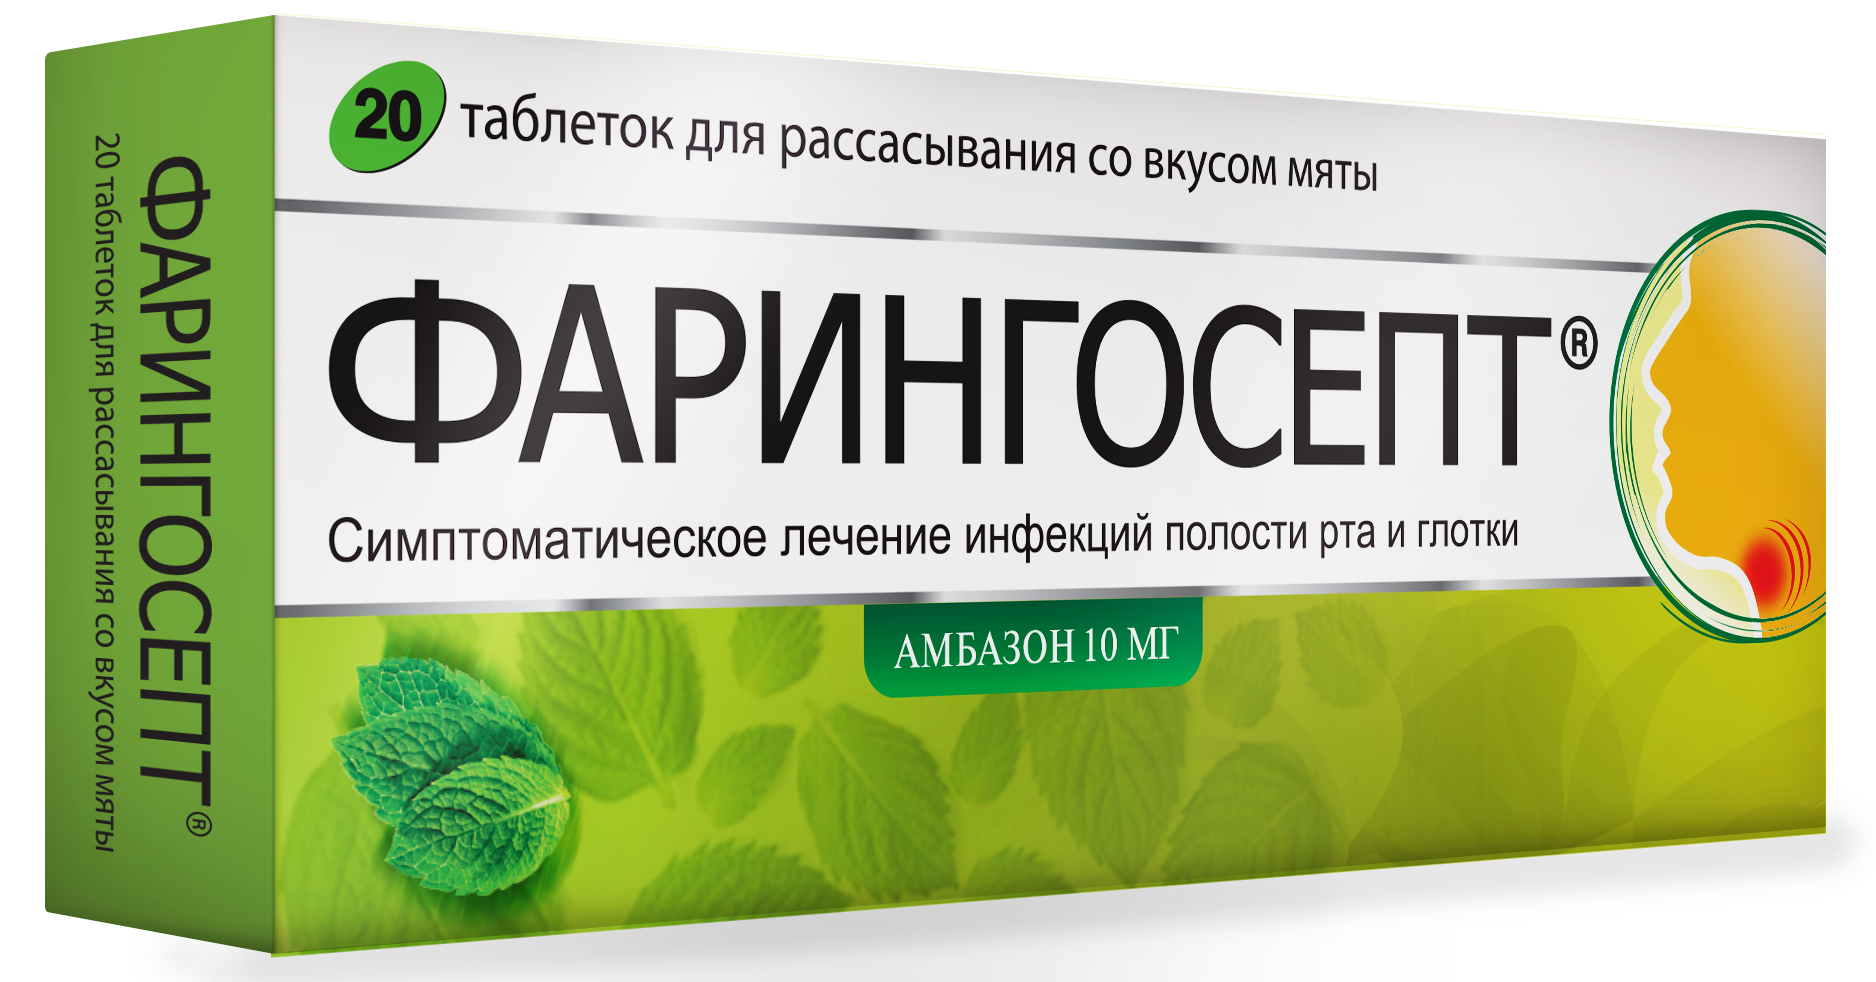 Фарингосепт, таблетки для рассасывания (мята) 10 мг, 20 шт.